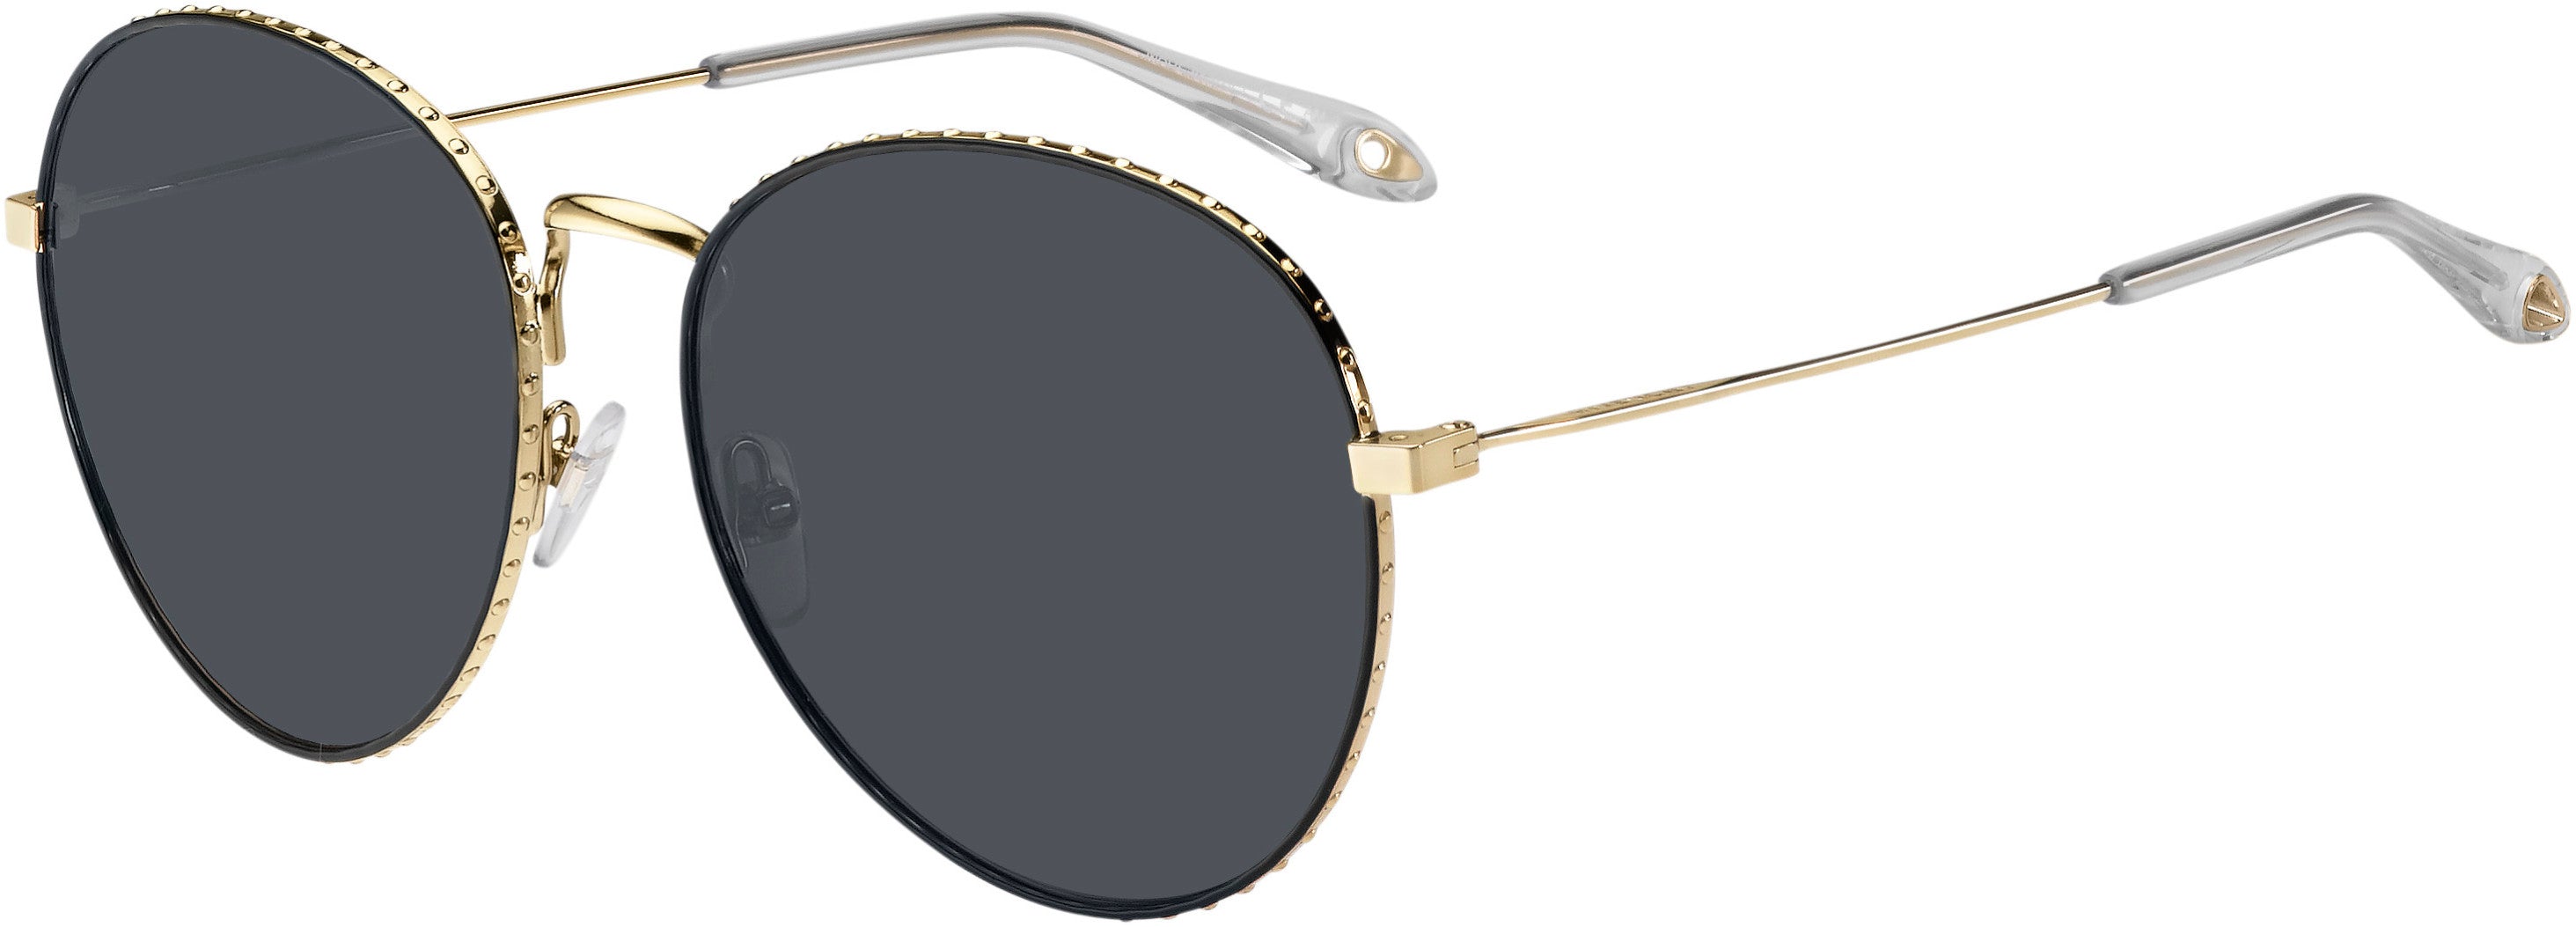  Givenchy 7089/S Oval Modified Sunglasses 0J5G-0J5G  Gold (IR Gray)